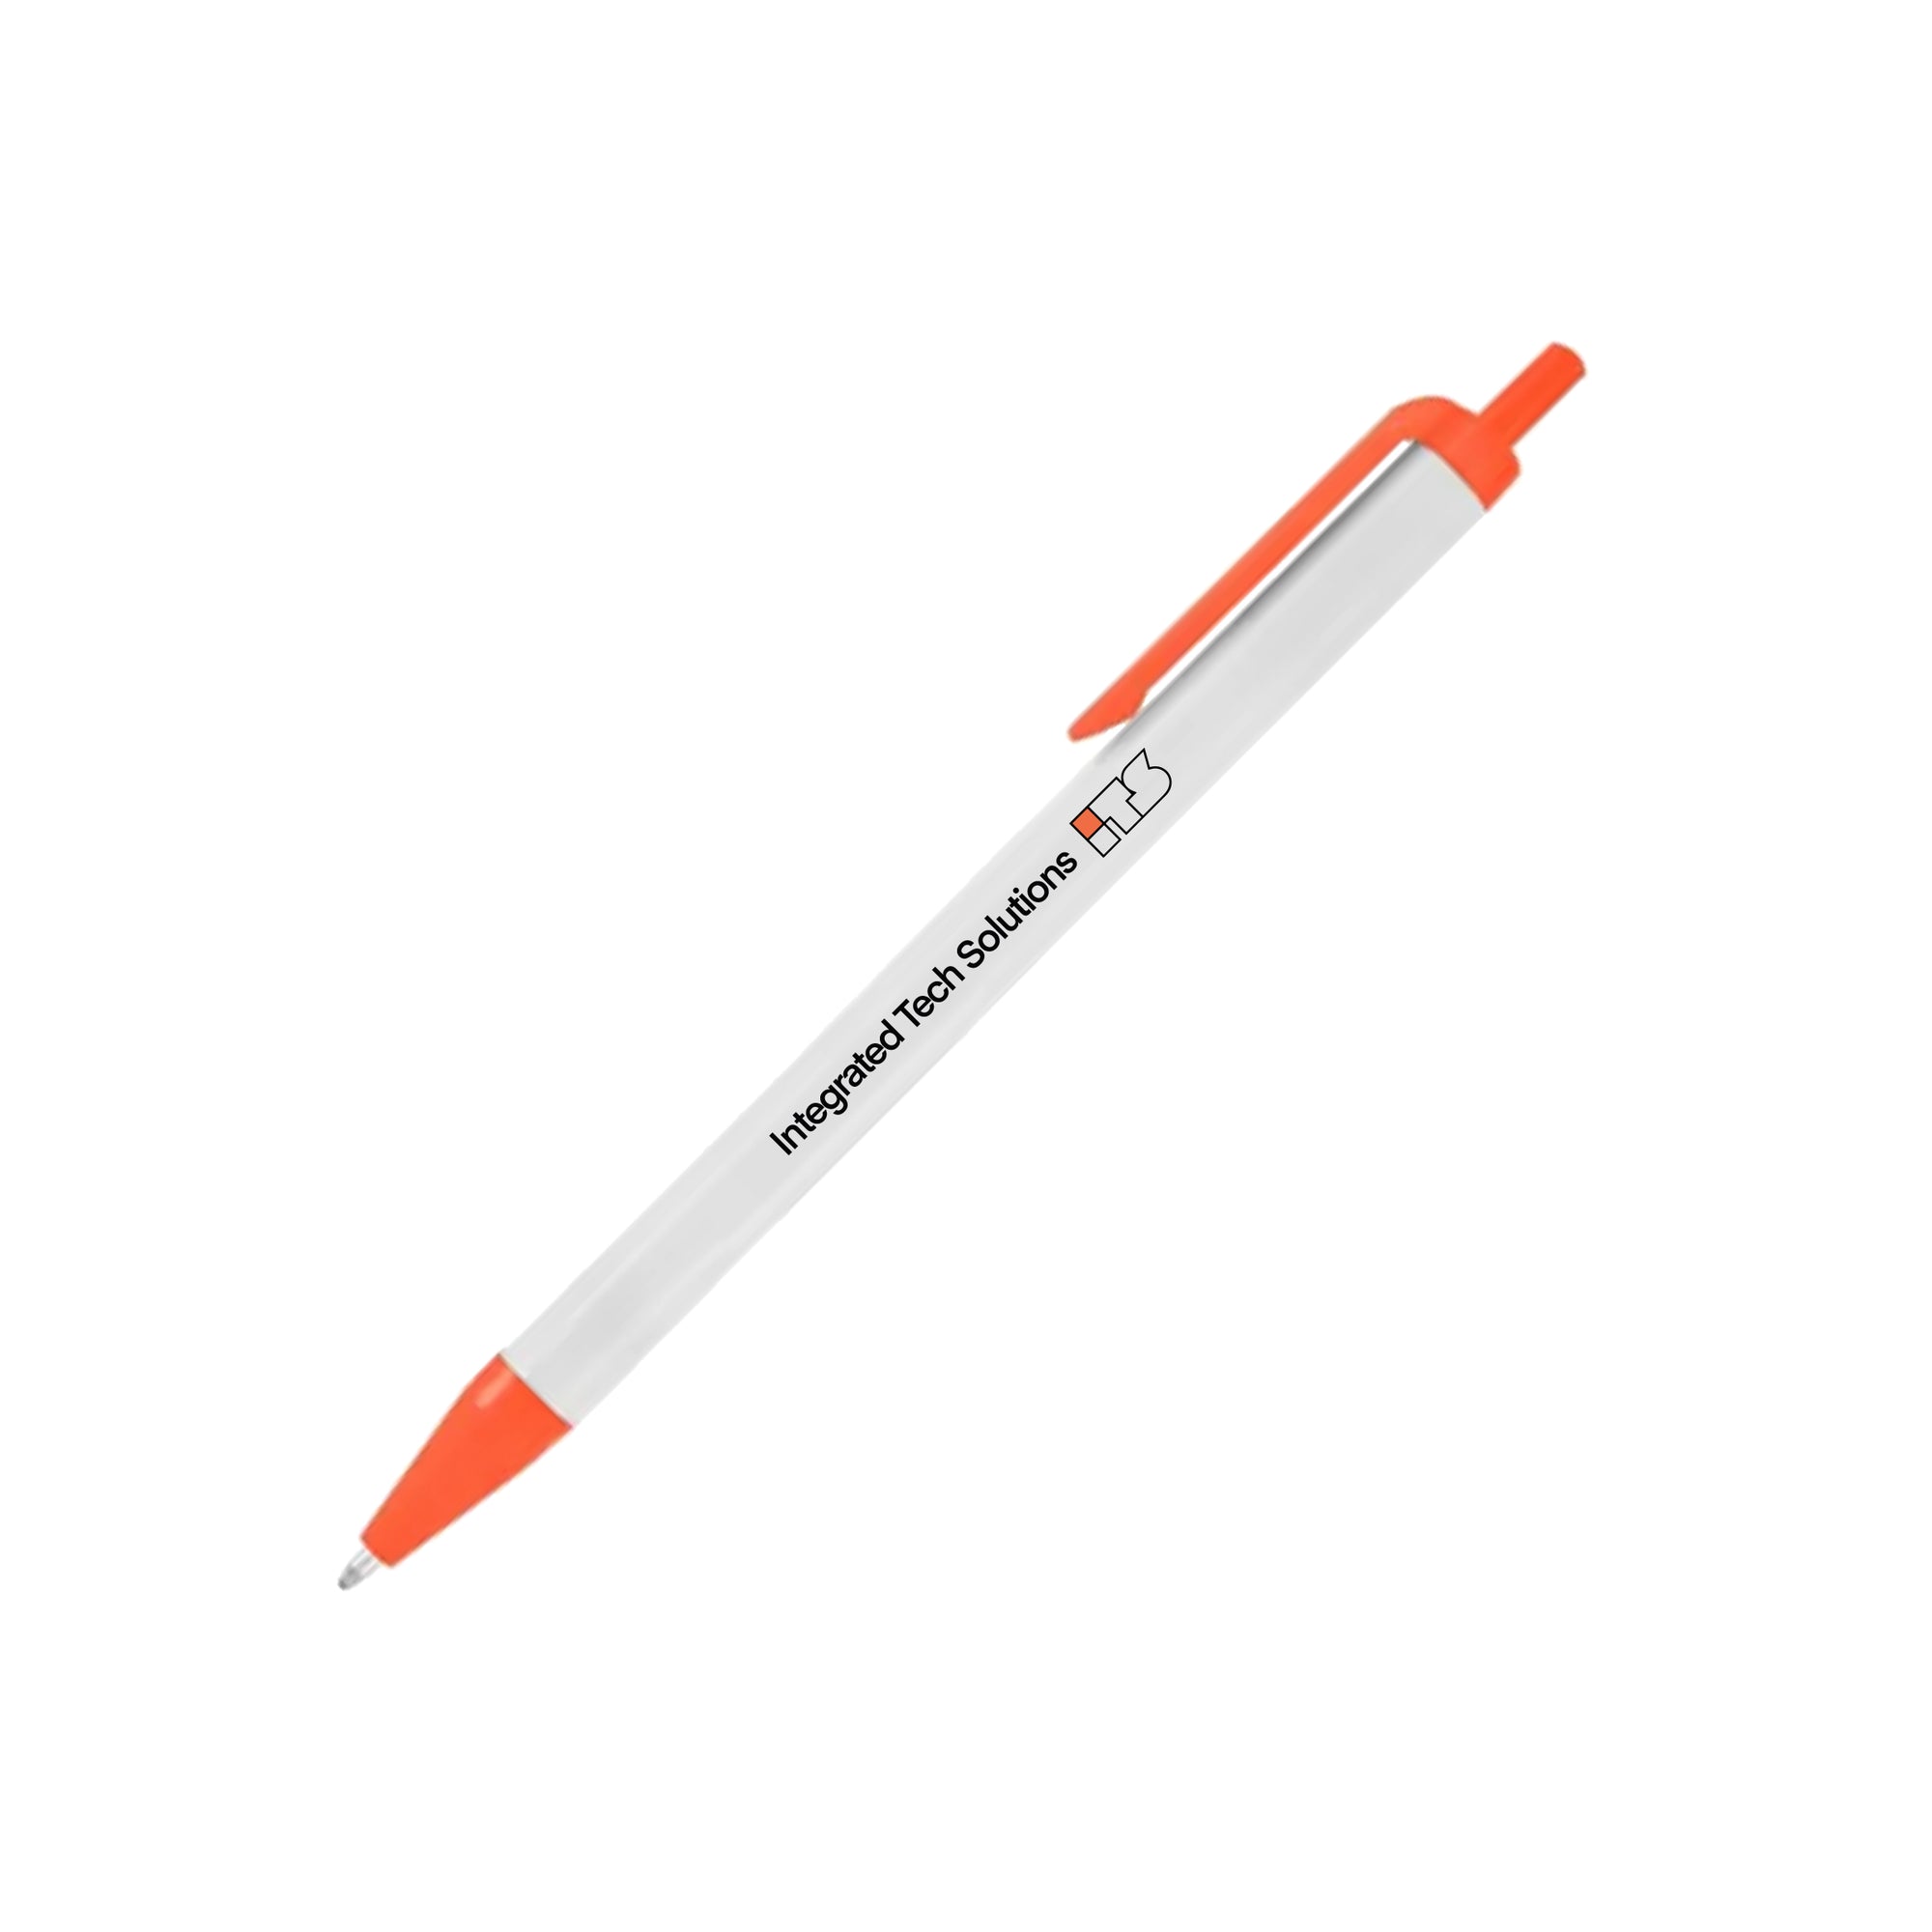 Aesop Rock - ITS Pen & Pocket Protector Set [Pre-Order]